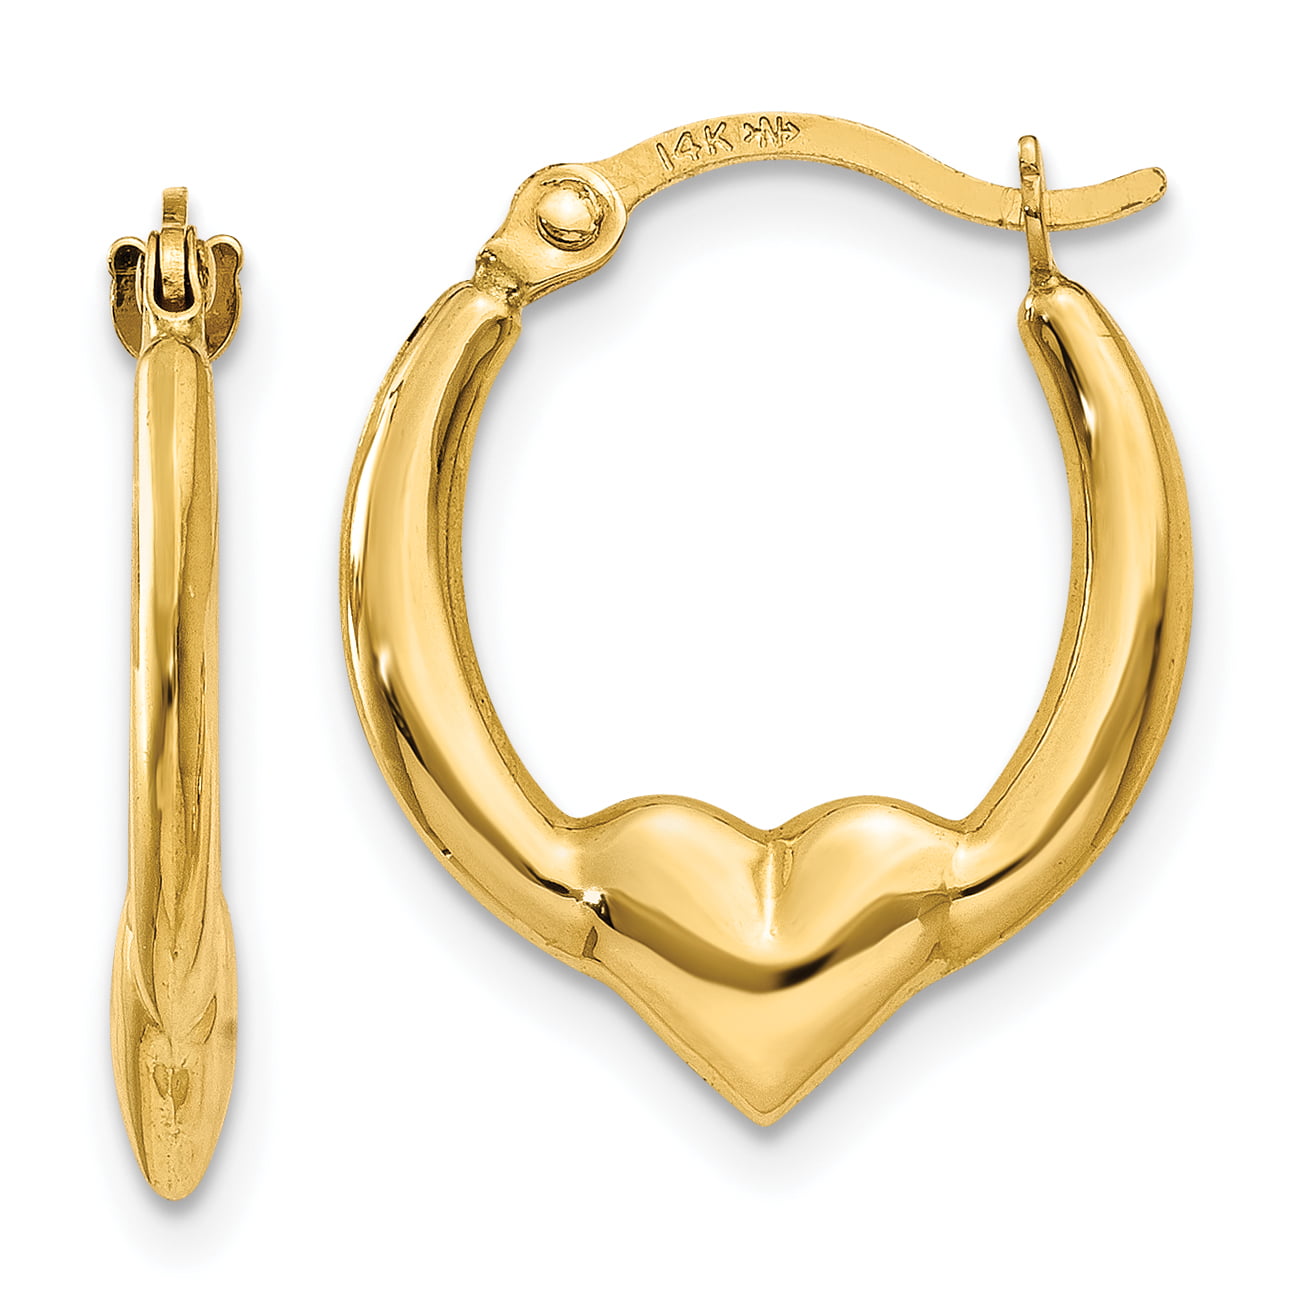 7.75 mm Bold Hoop Earrings in Genuine 14k Yellow Gold 18 to 24mm